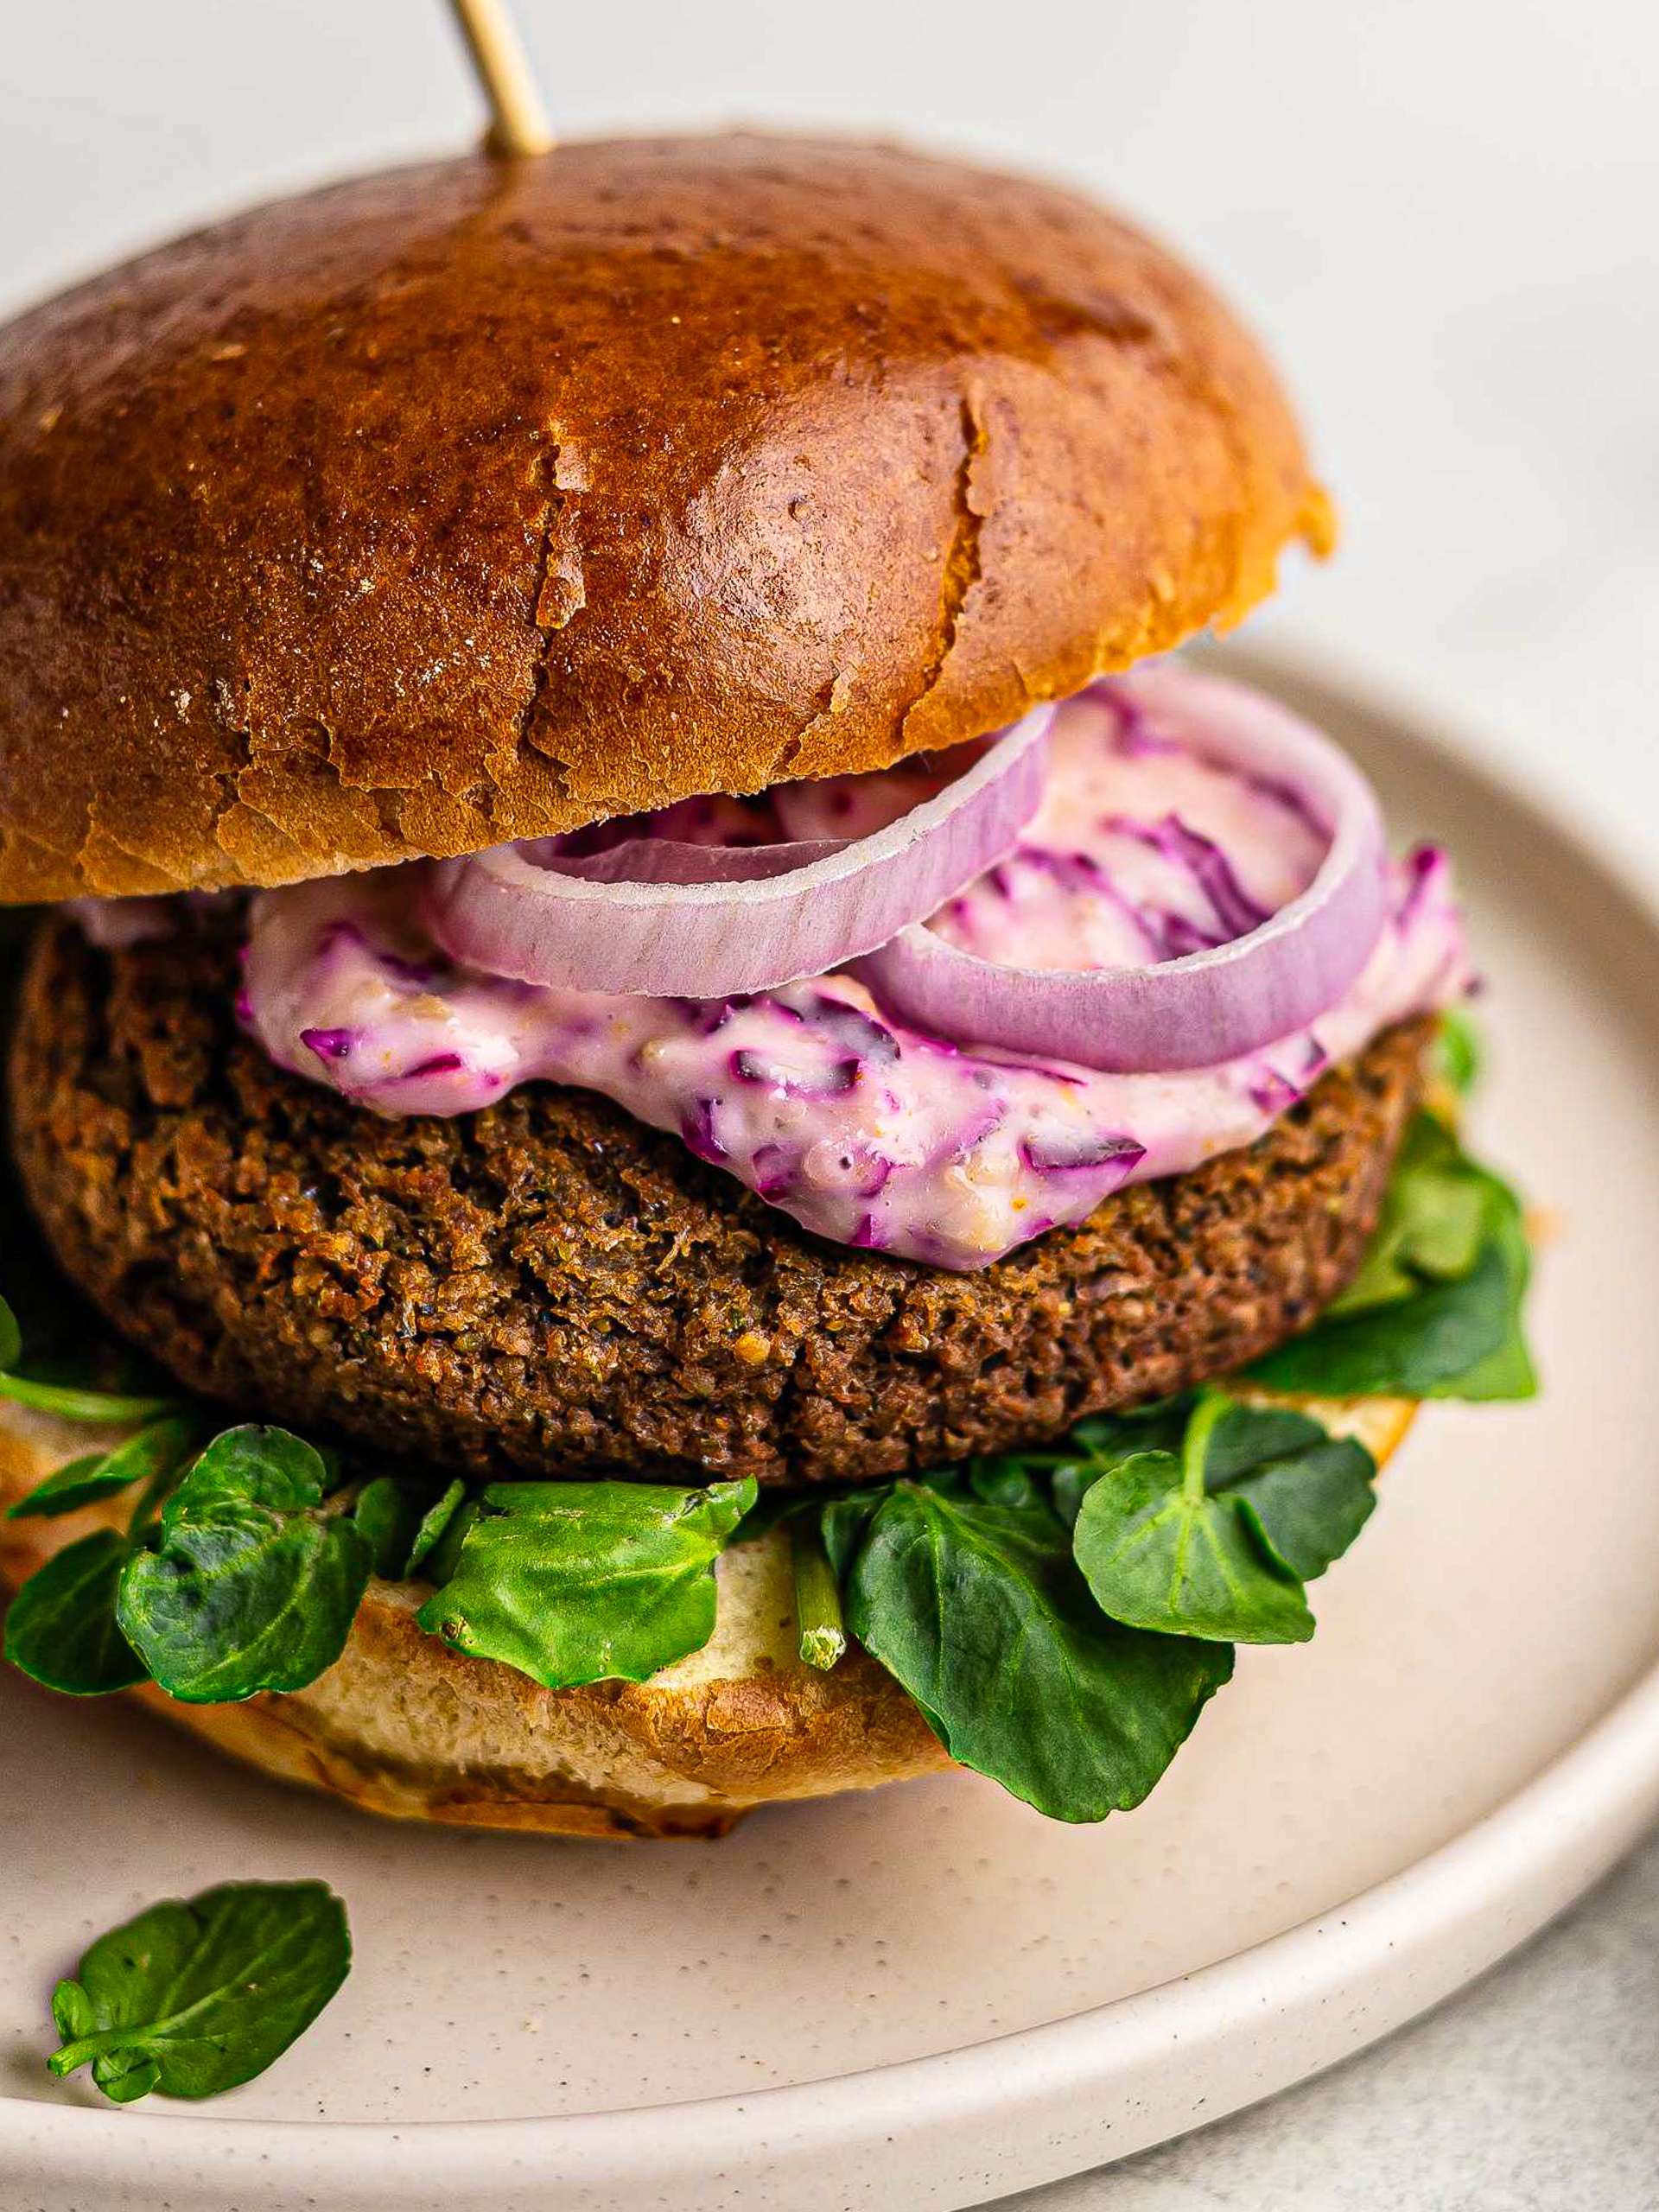 How to Make a Seriously Nutritious Vegan Burger